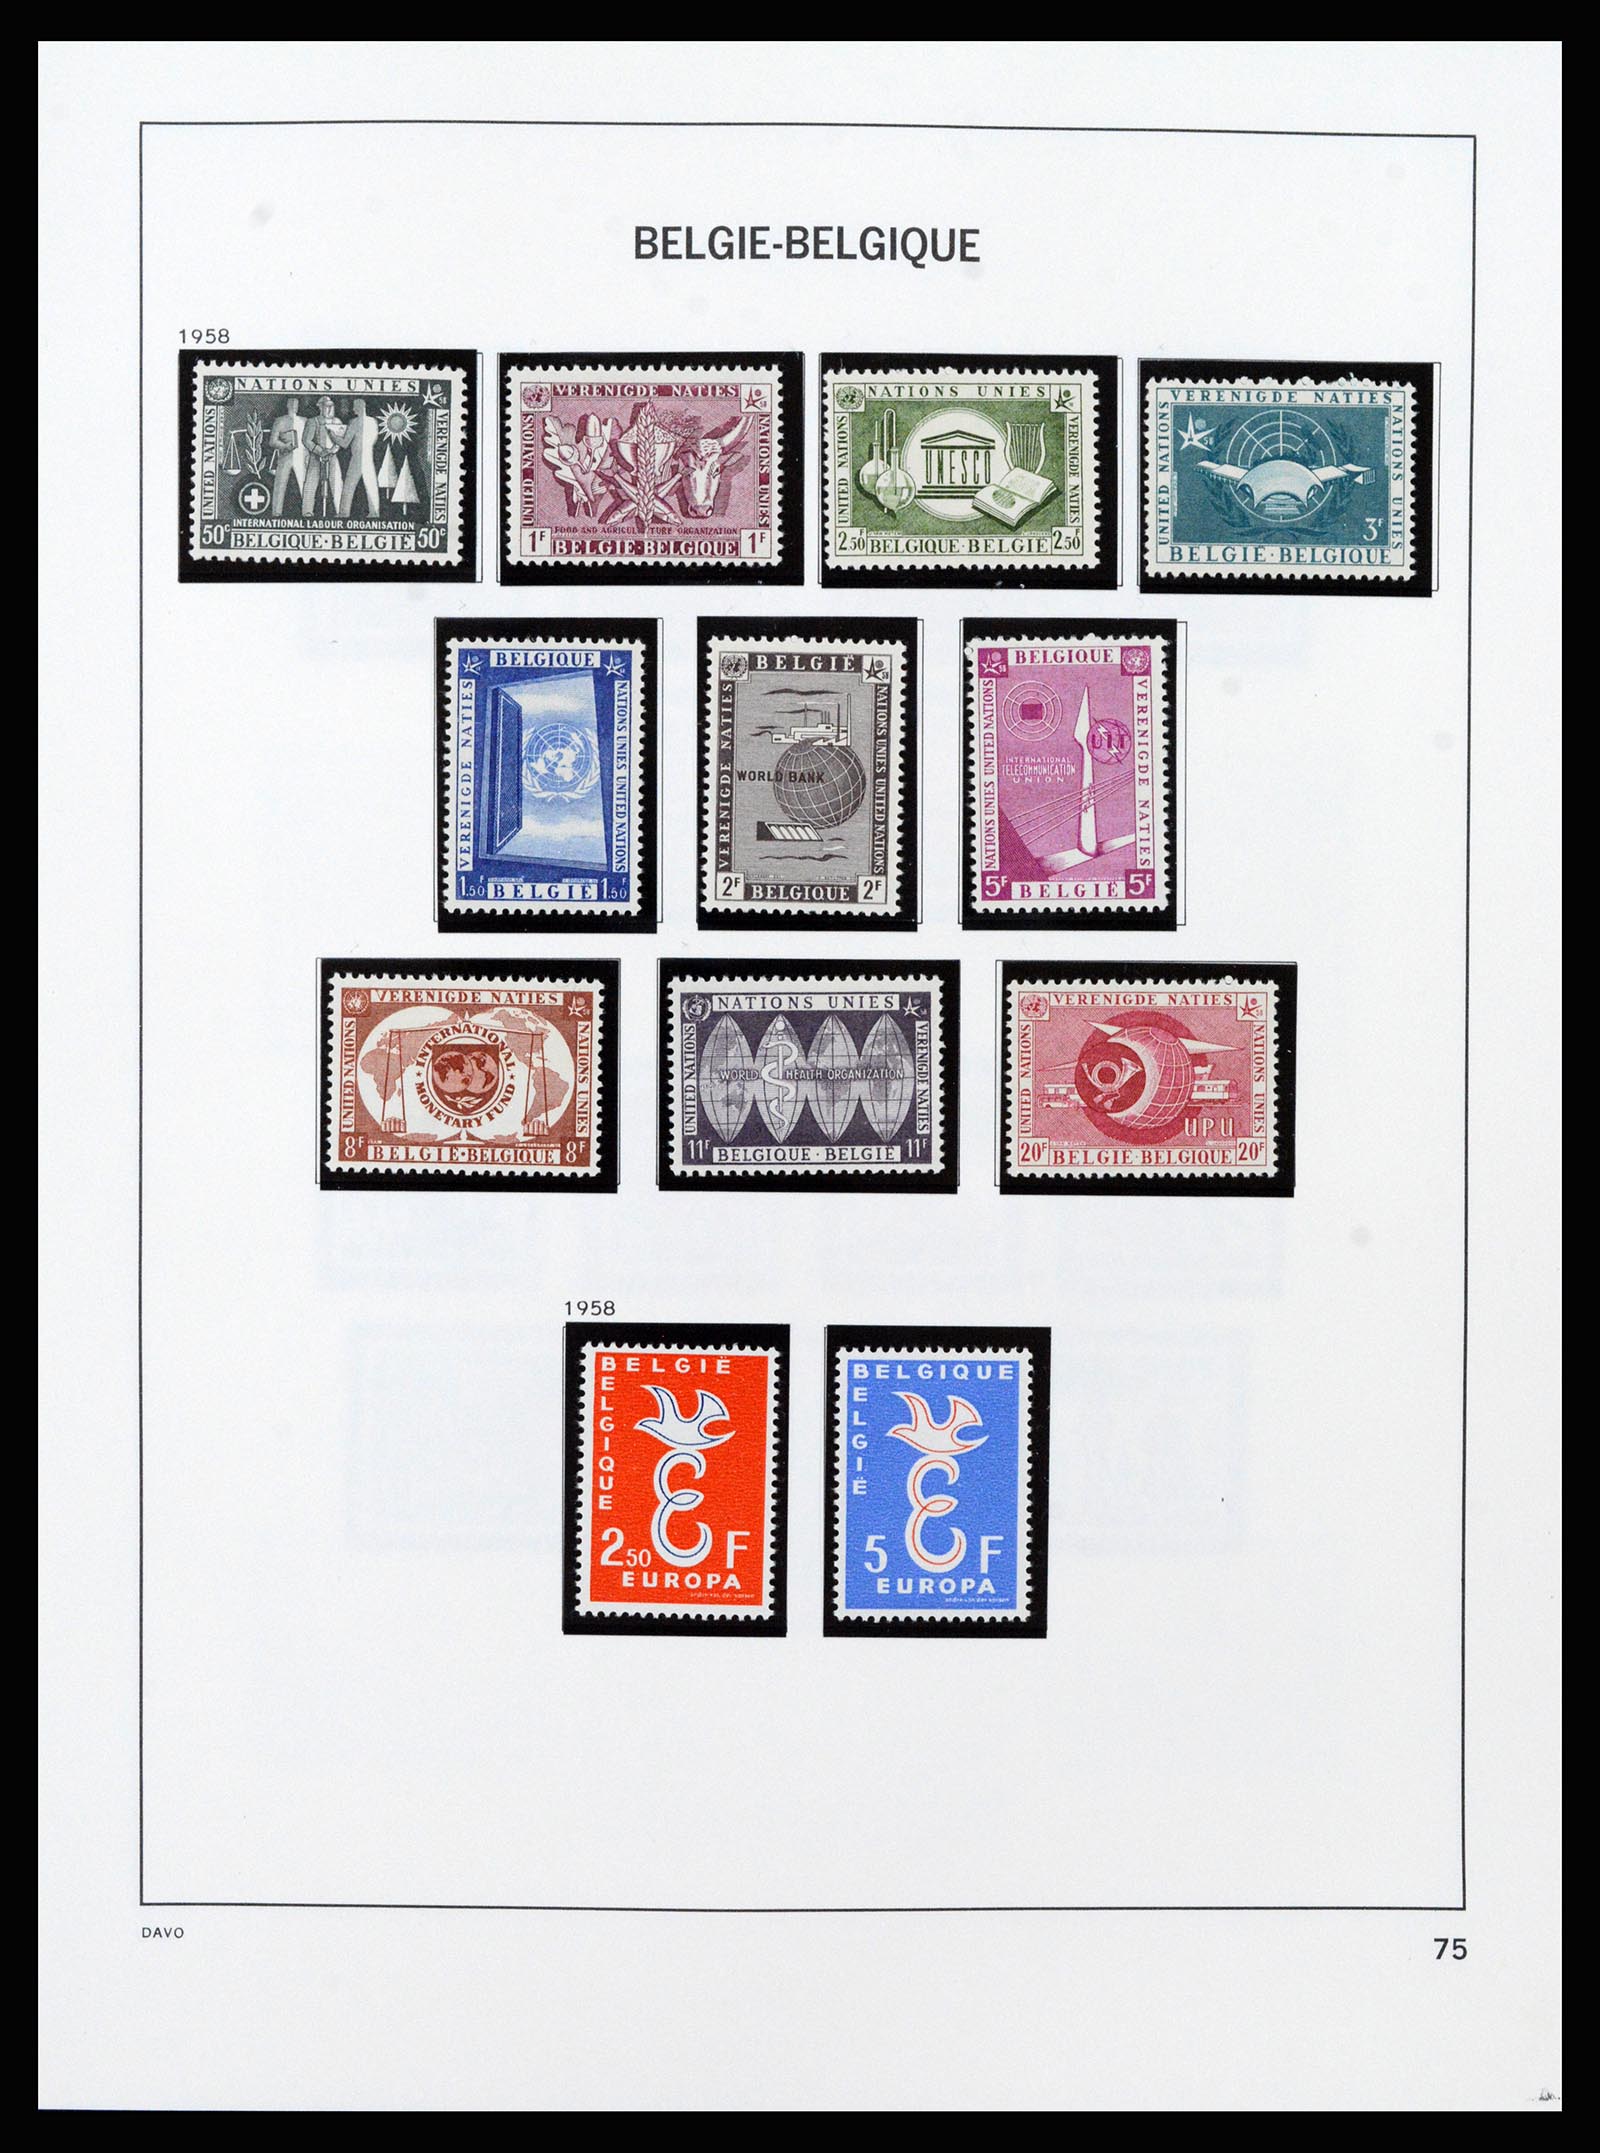 37189 077 - Stamp collection 37189 Belgium 1849-2006.